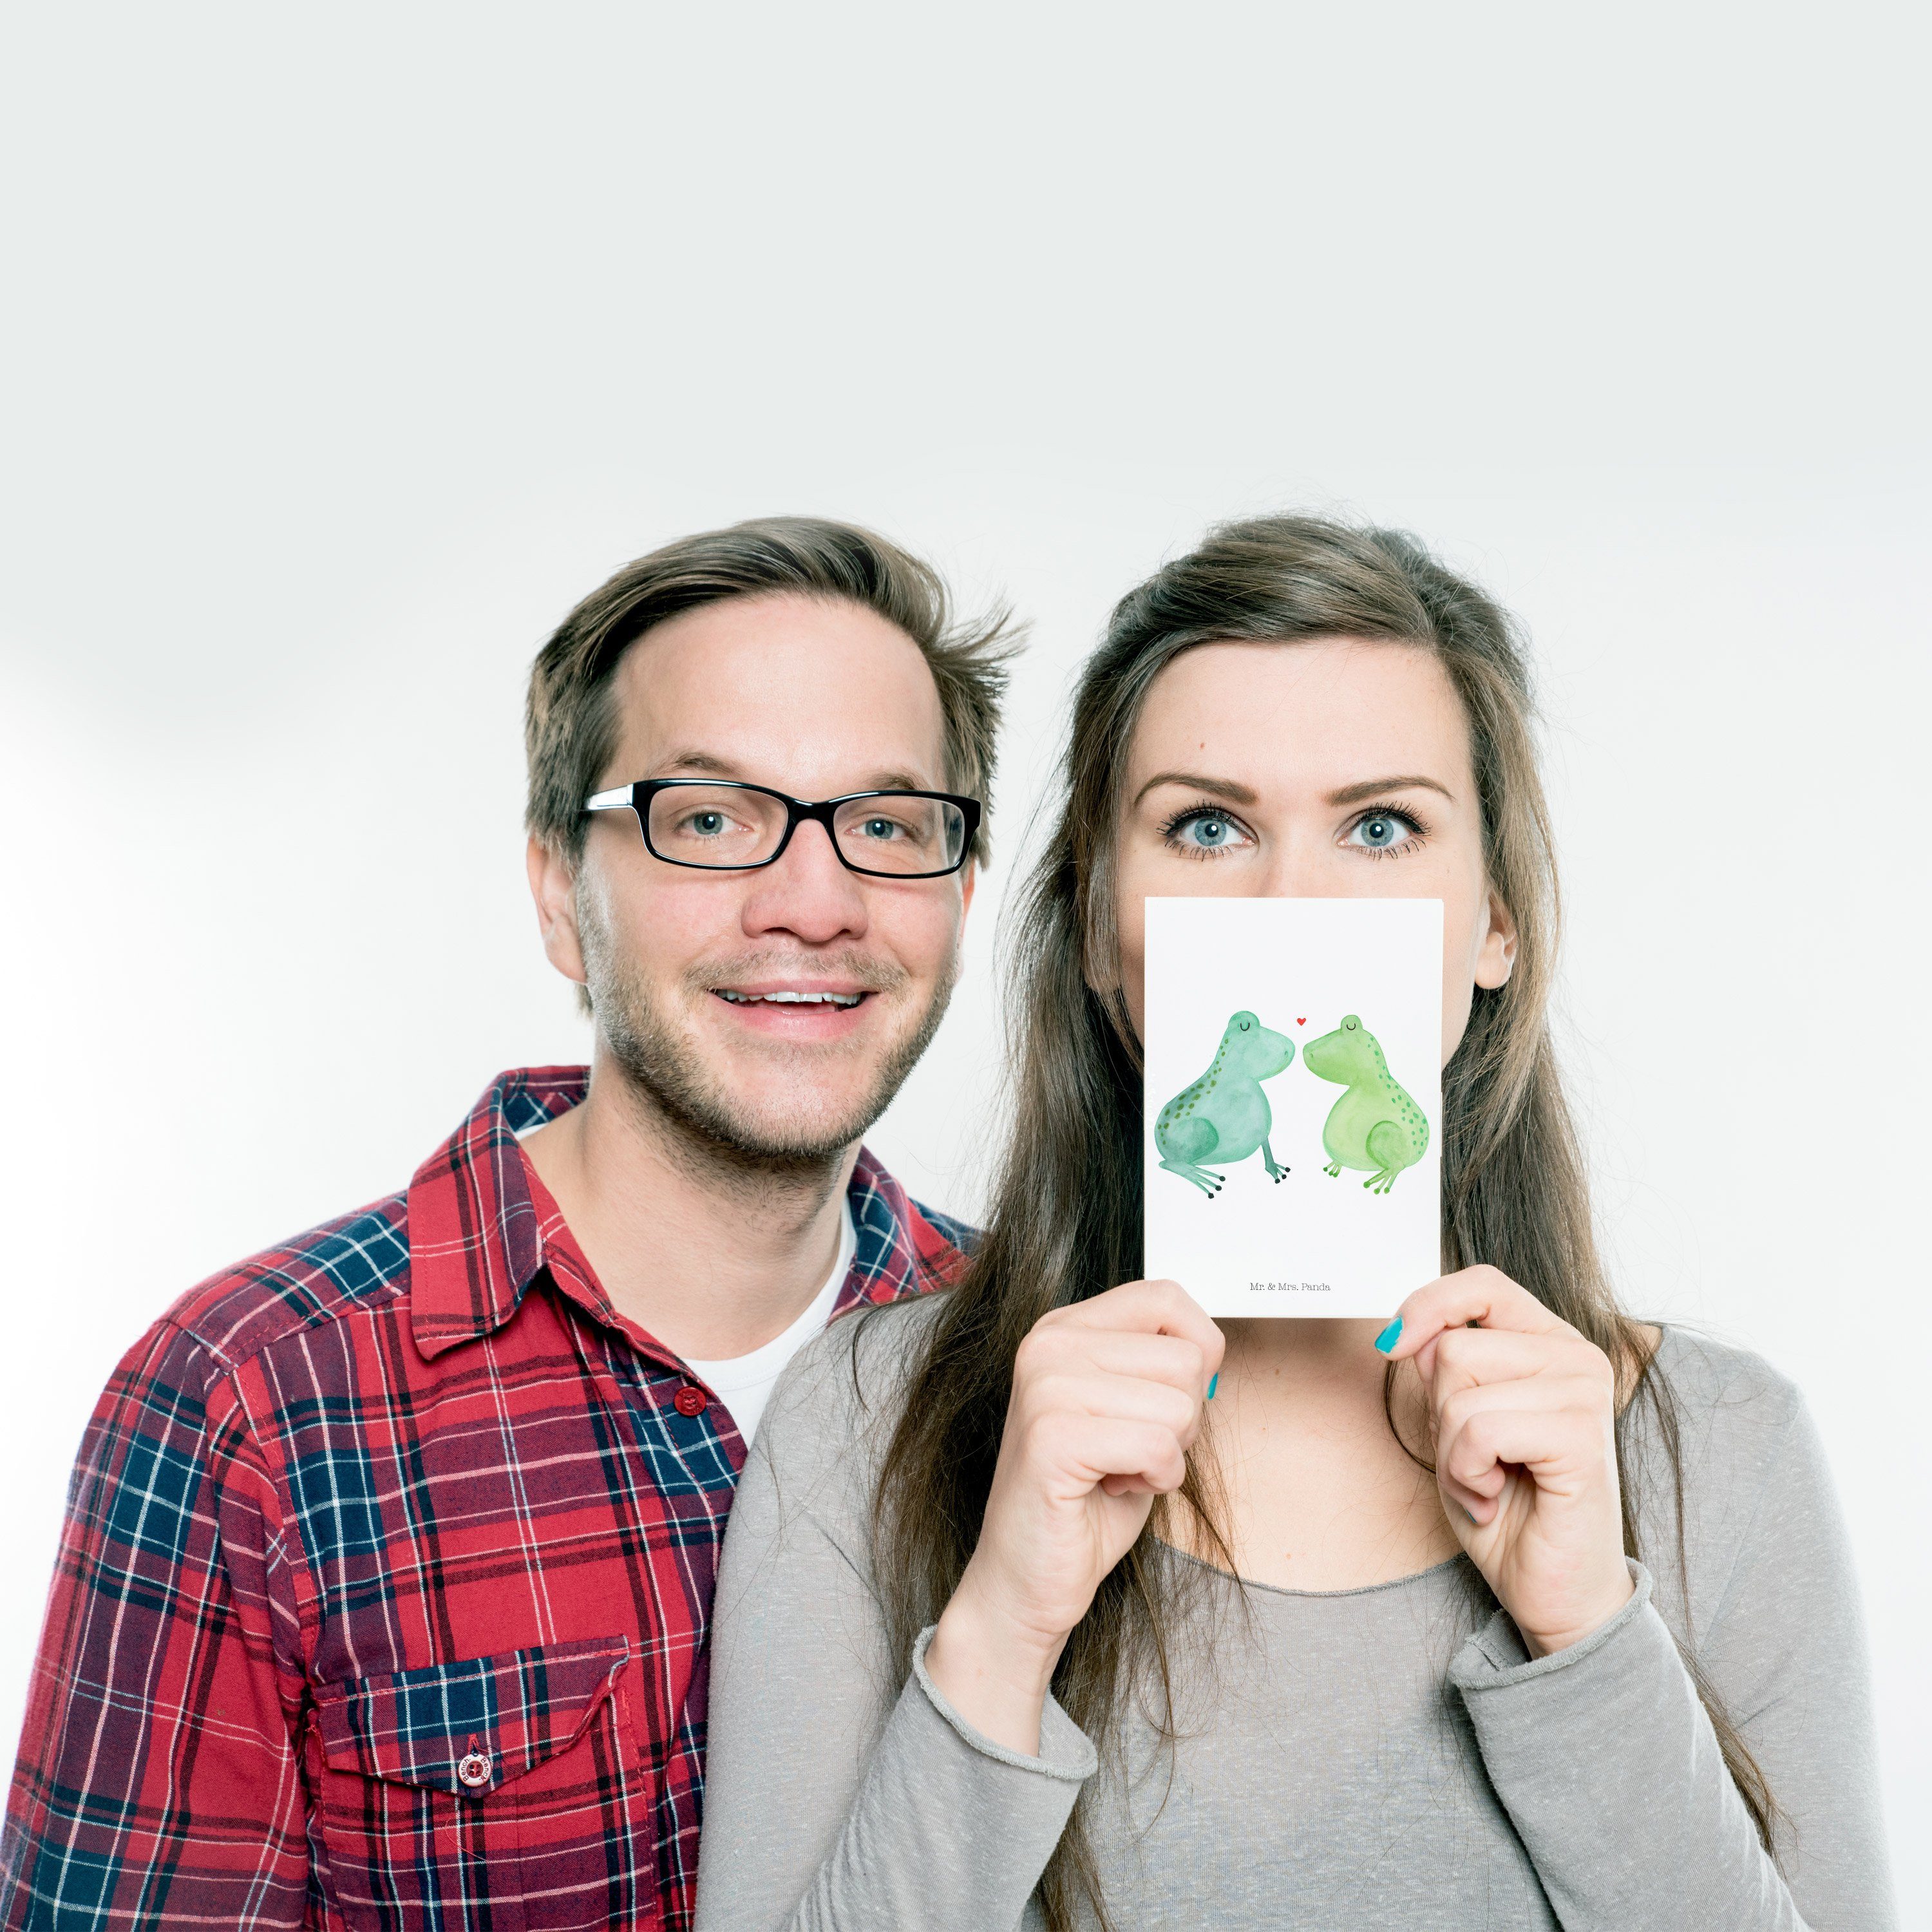 Mr. & Mrs. Geschenk, Freund, Ansichtskarte, Frosch Weiß Postkarte - Freundin, Panda Liebe - Einl